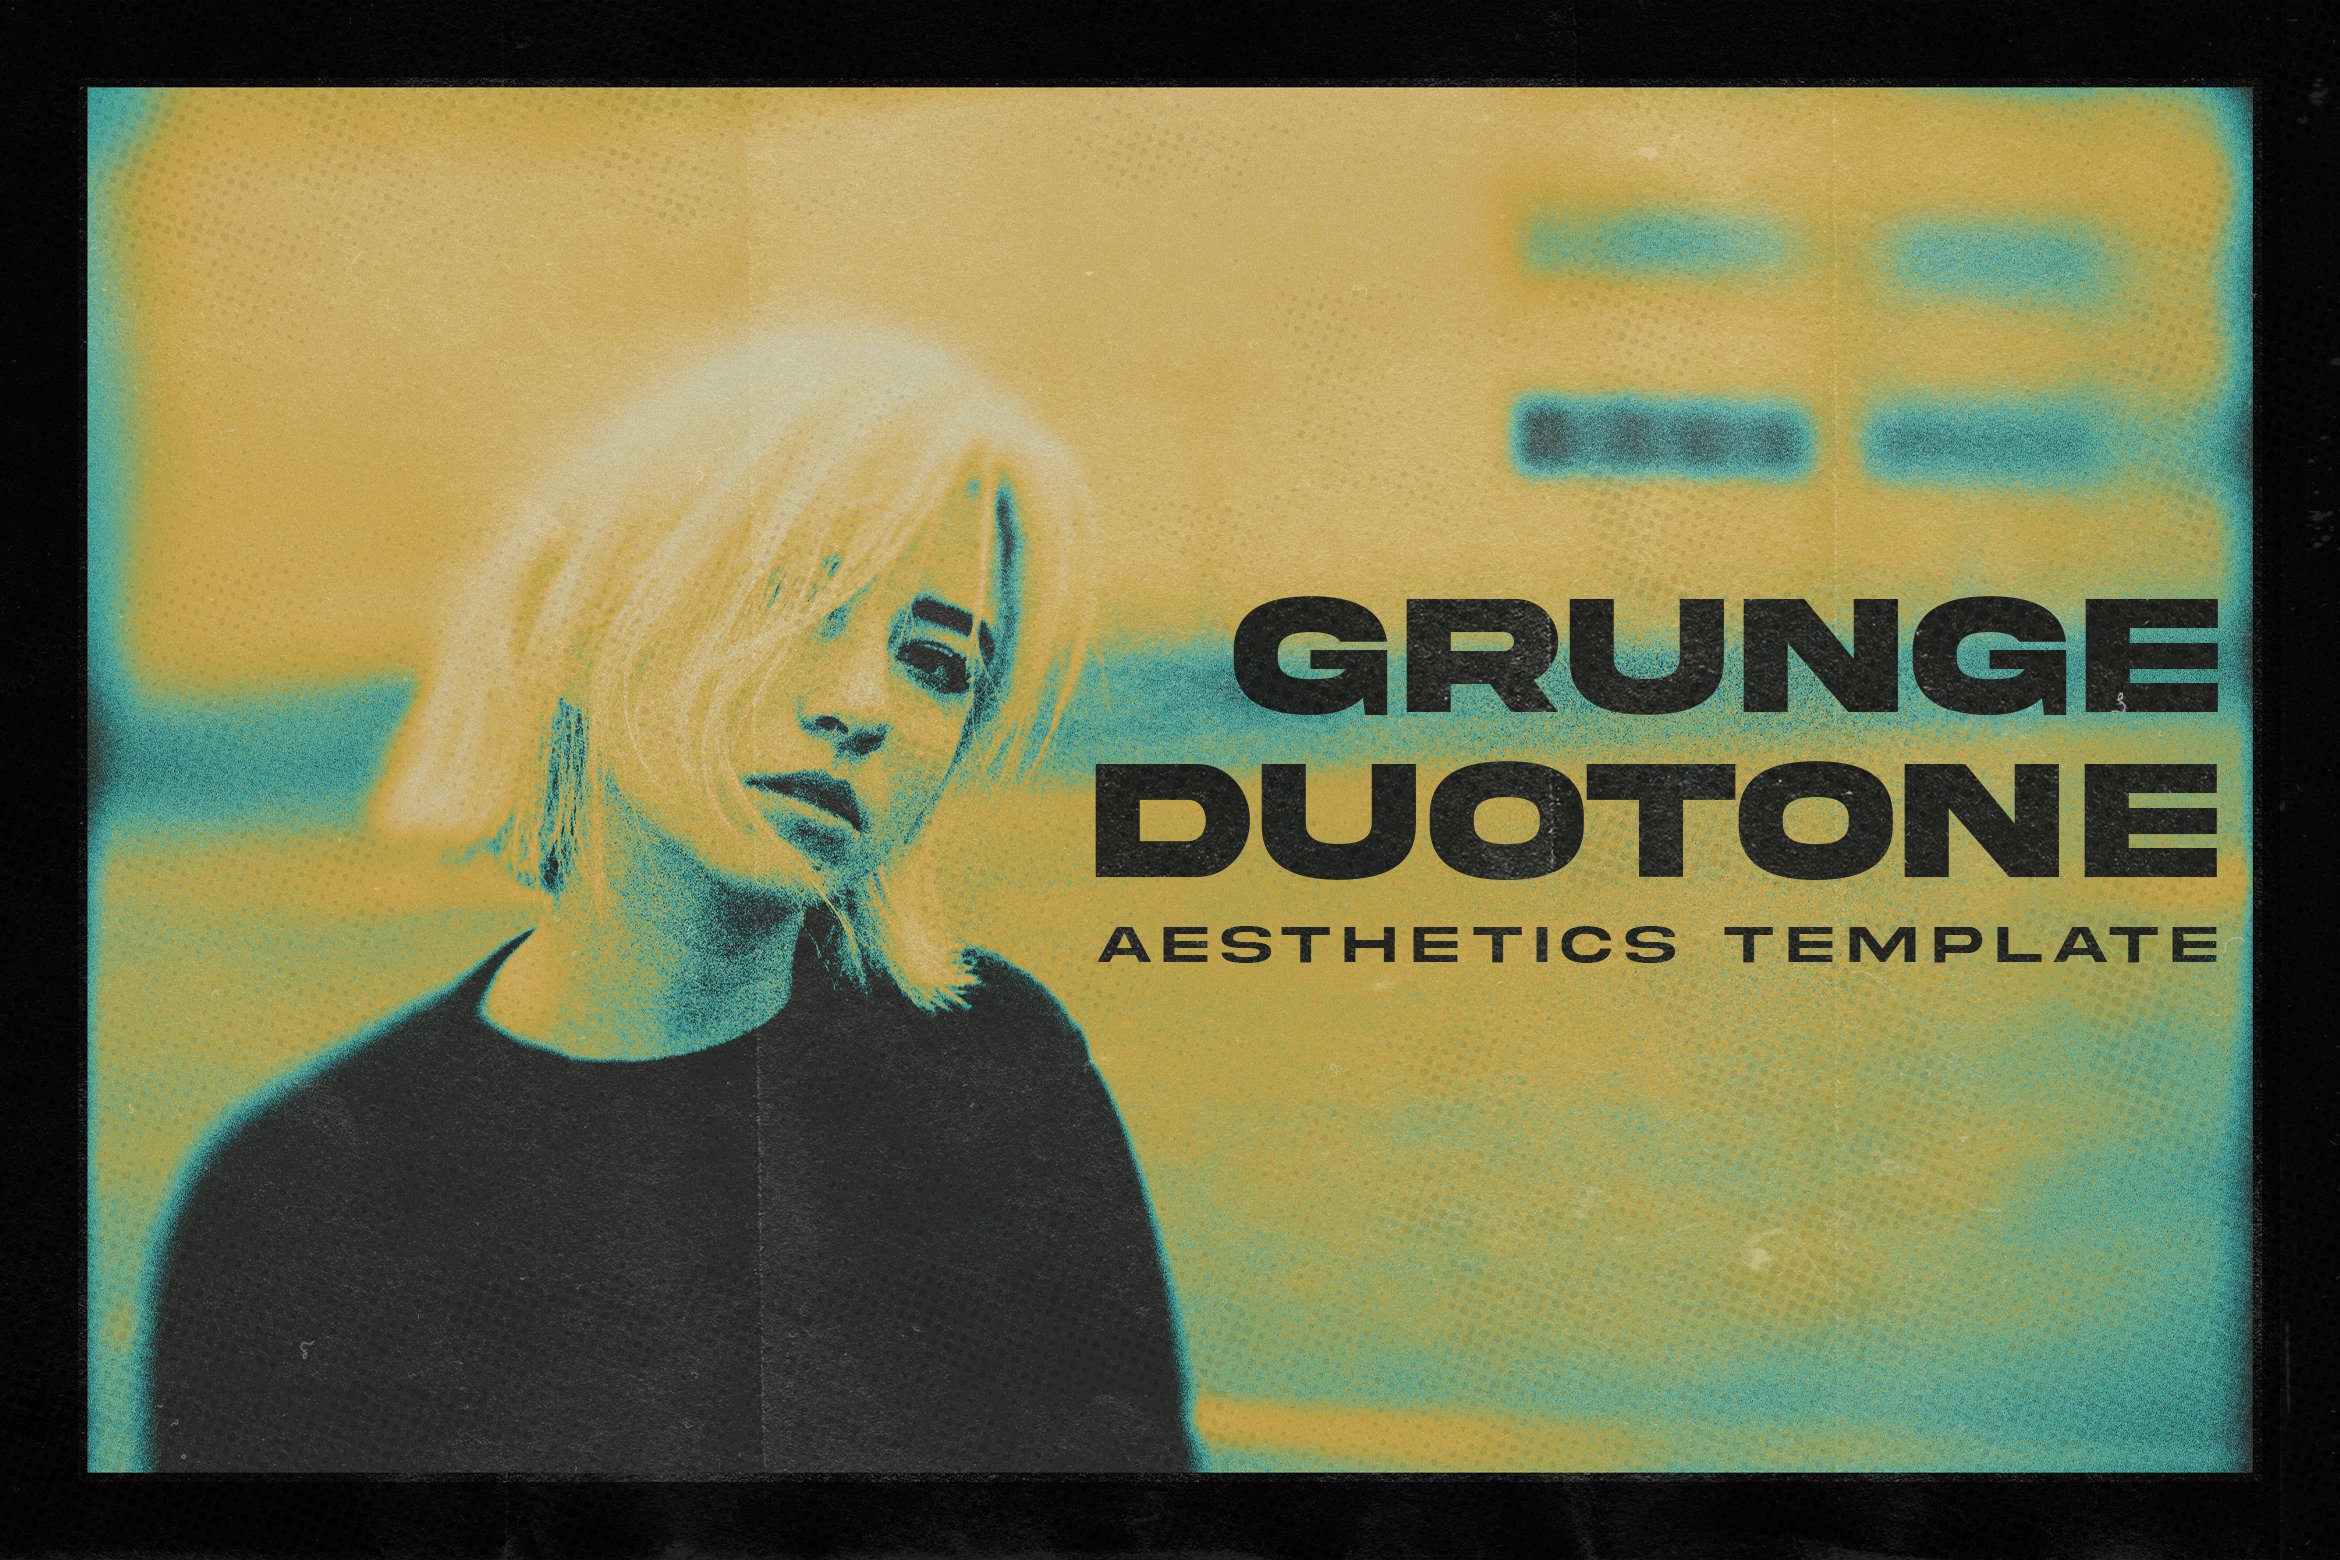 Grunge Duotone Aesthetics Templatecover image.